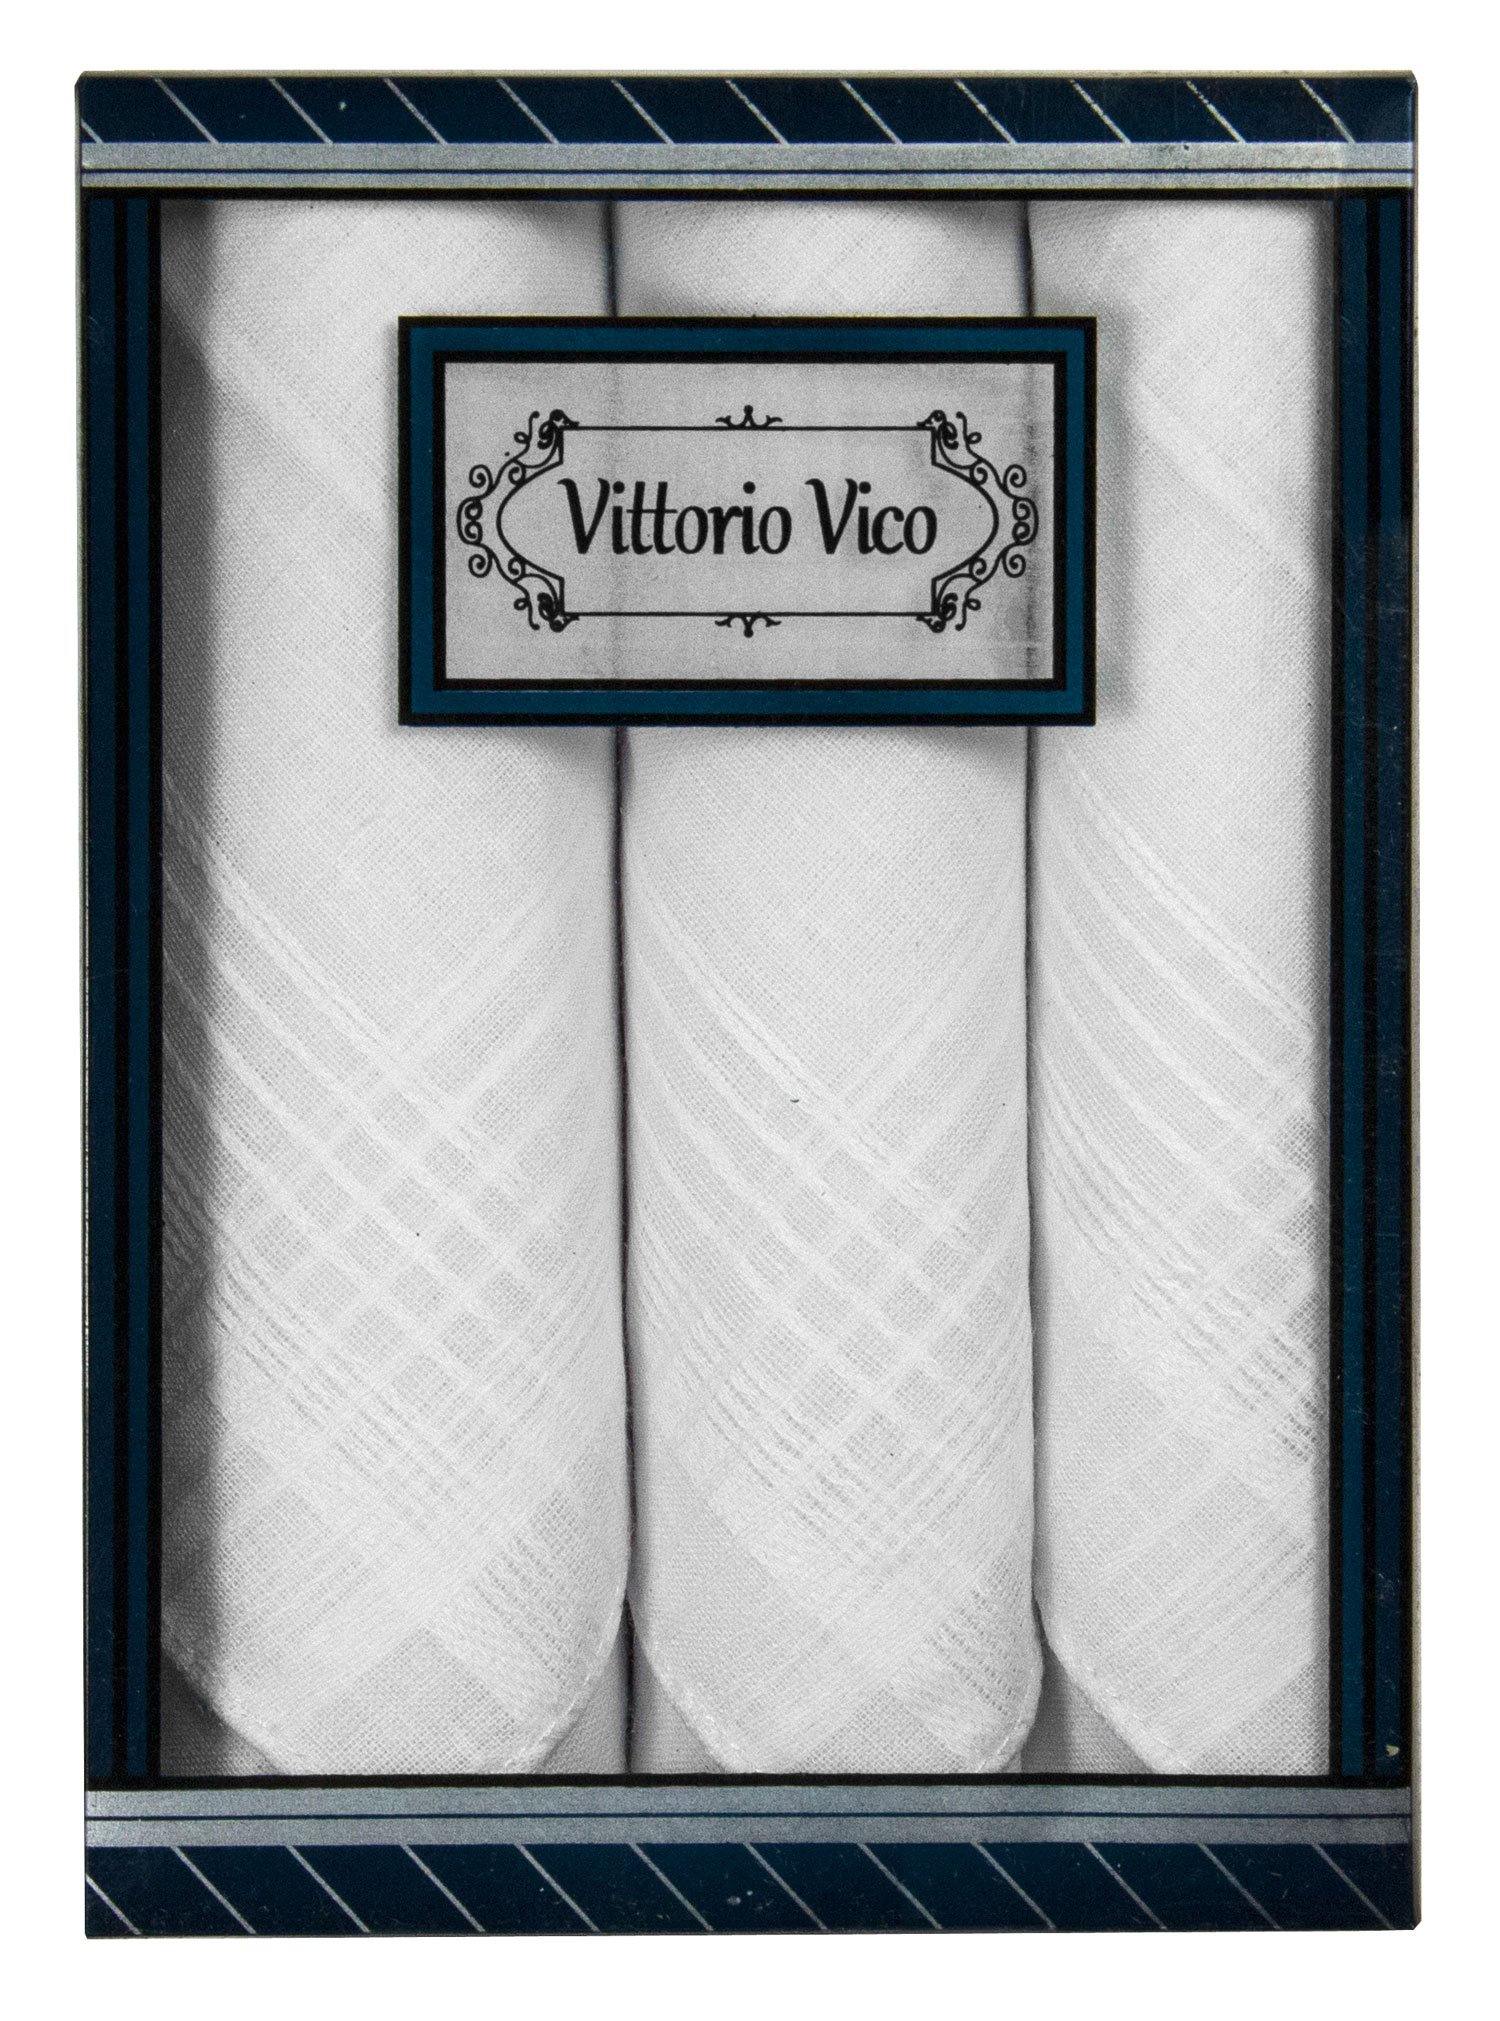 Vittorio Vico White Cotton Handkerchief Boxed Set by Classy Cufflinks